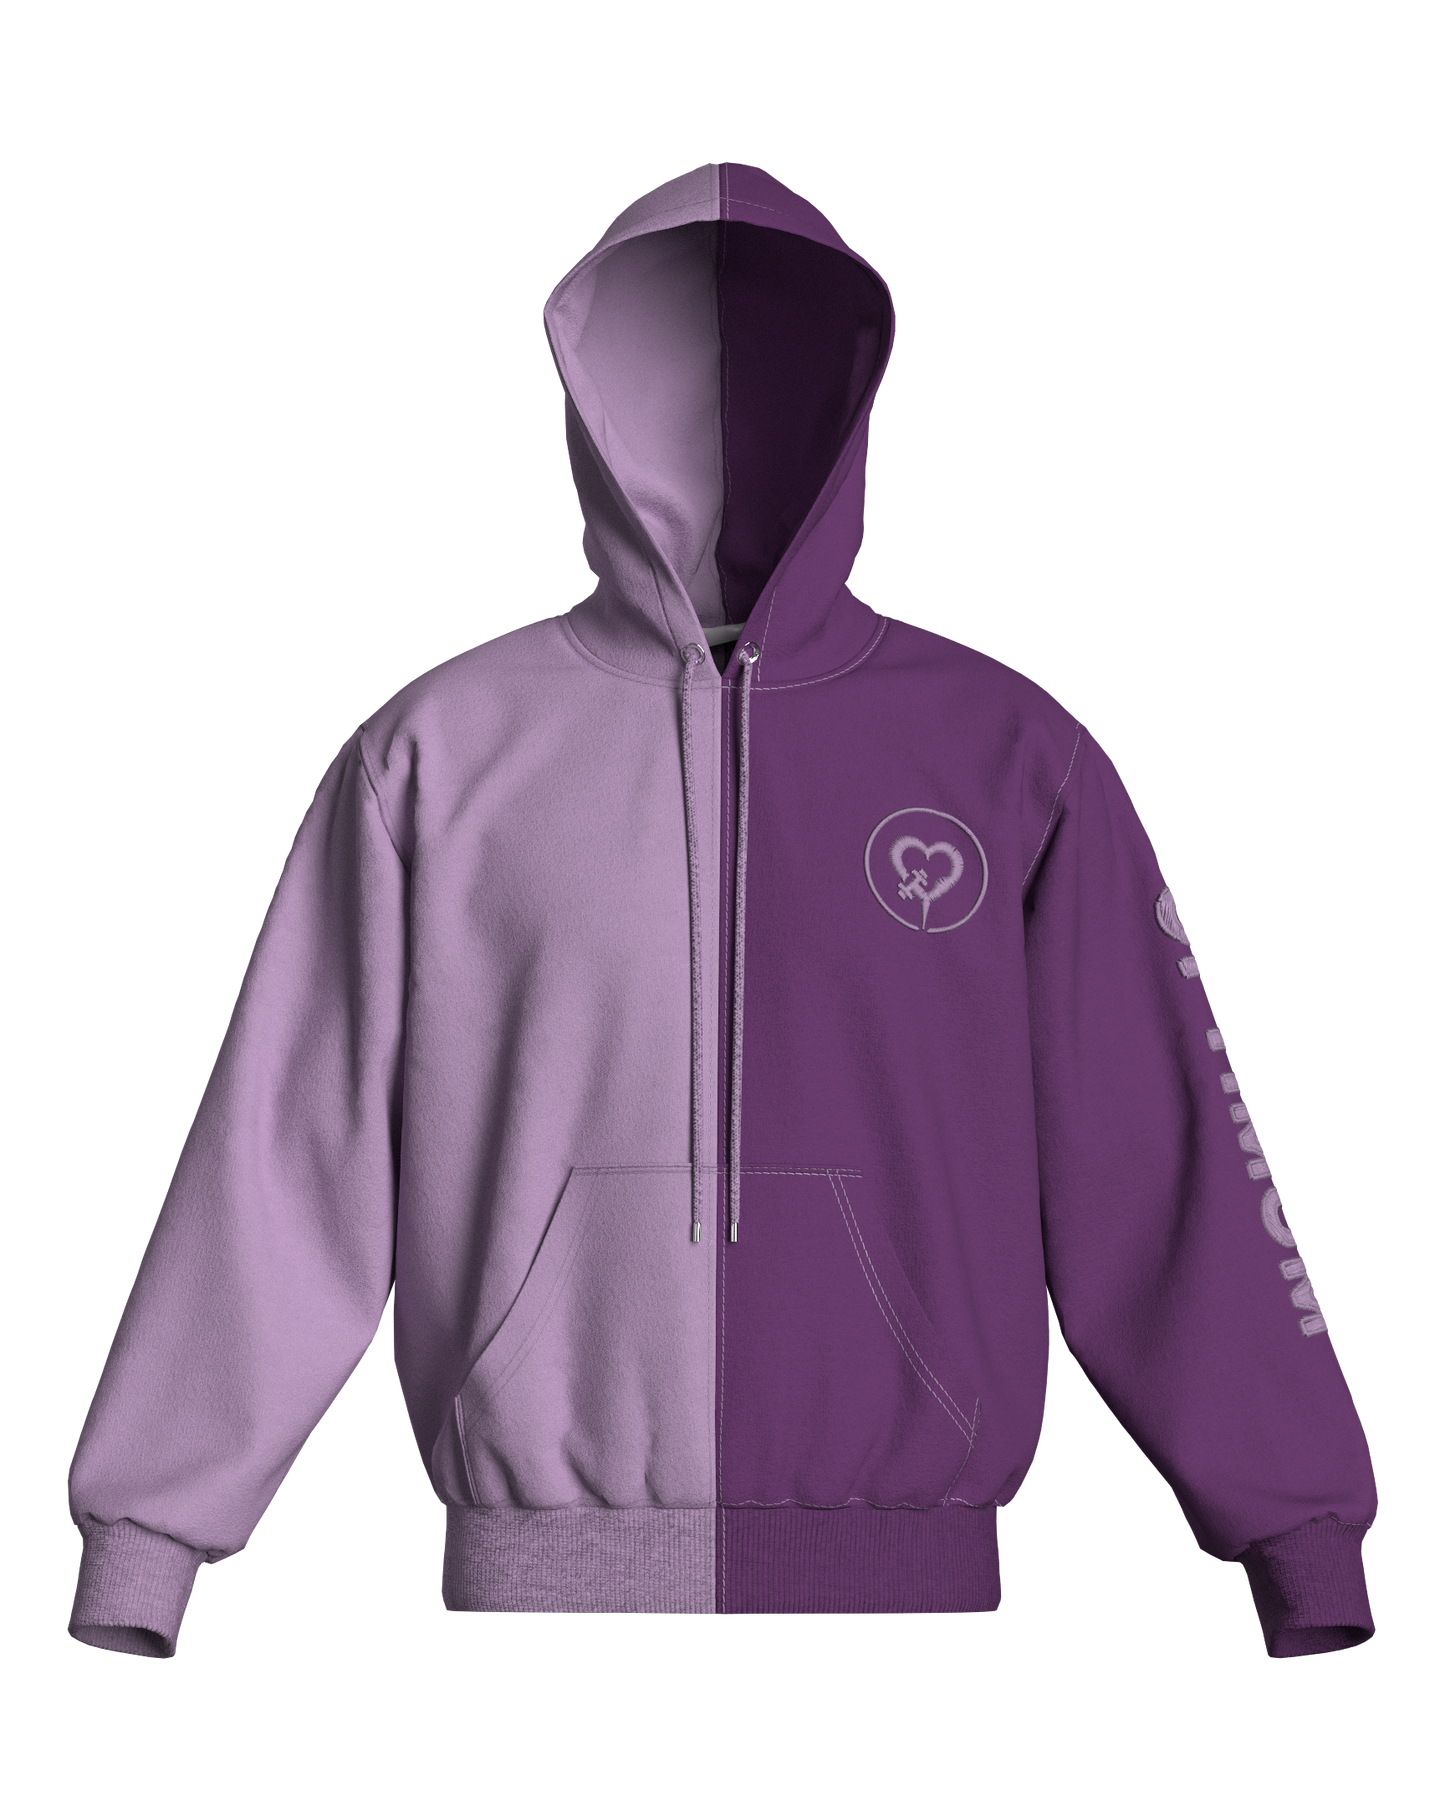 Bermuda Purple So Shadey Sweatsuit - All Sizes